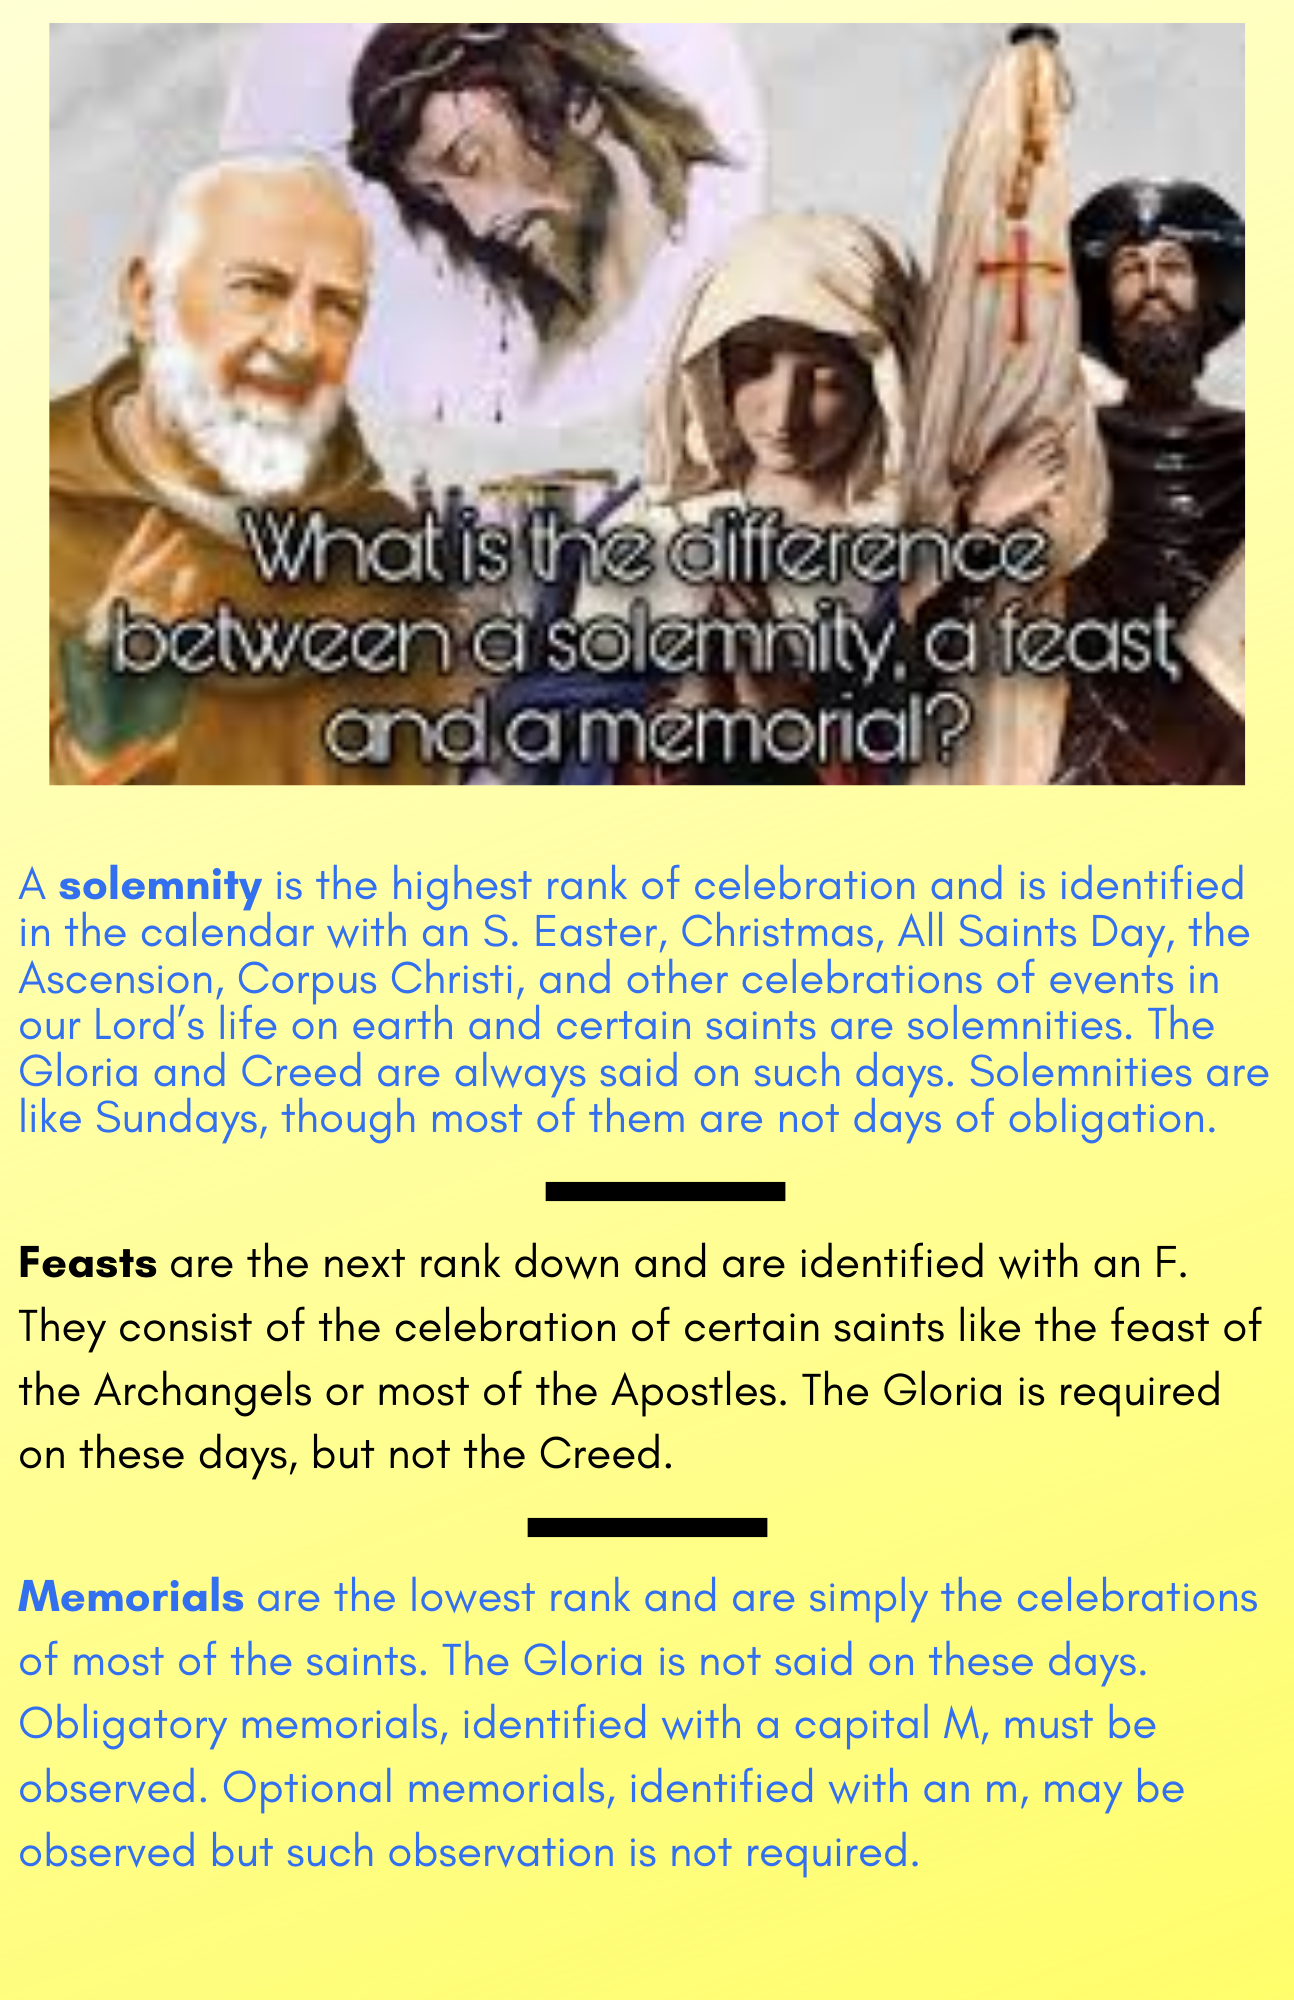 Solemnity-Feast-Memorial